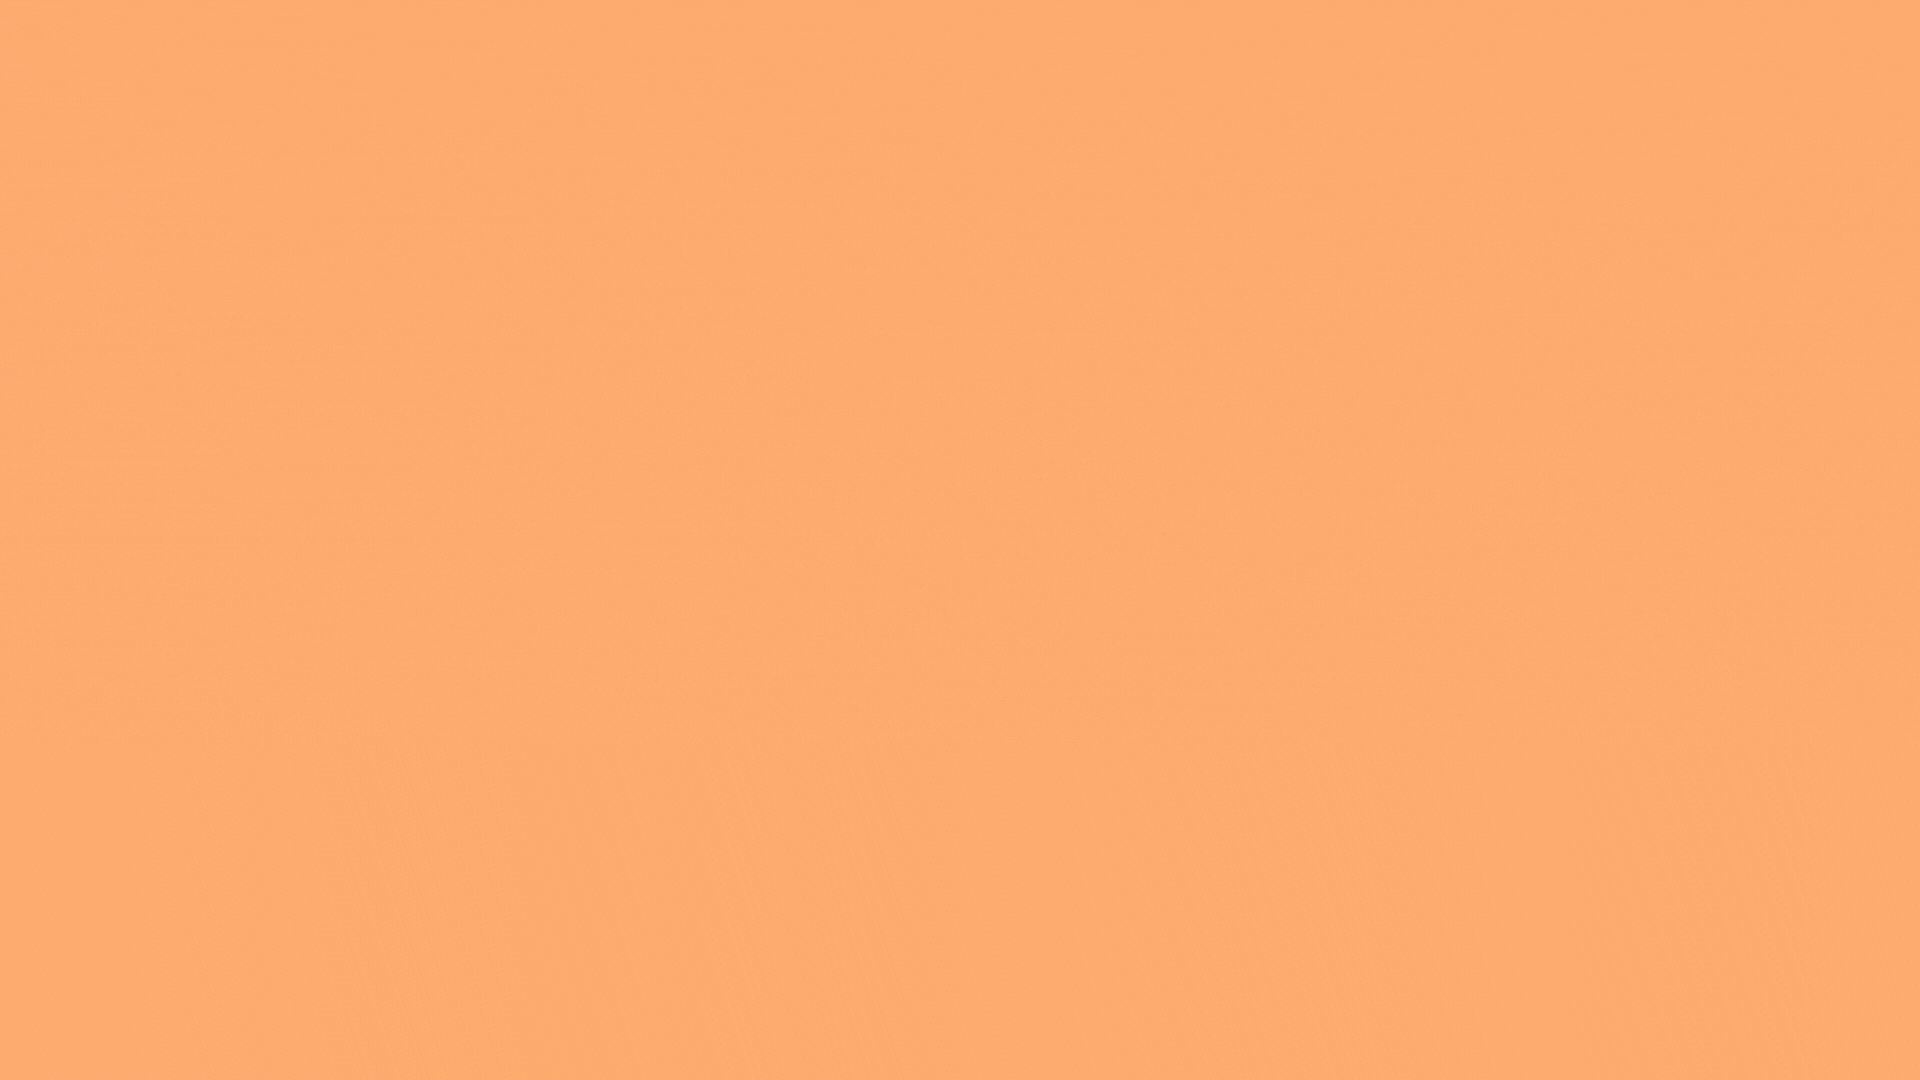 Orange 3로 데이터분석 쉽게하기(6기)